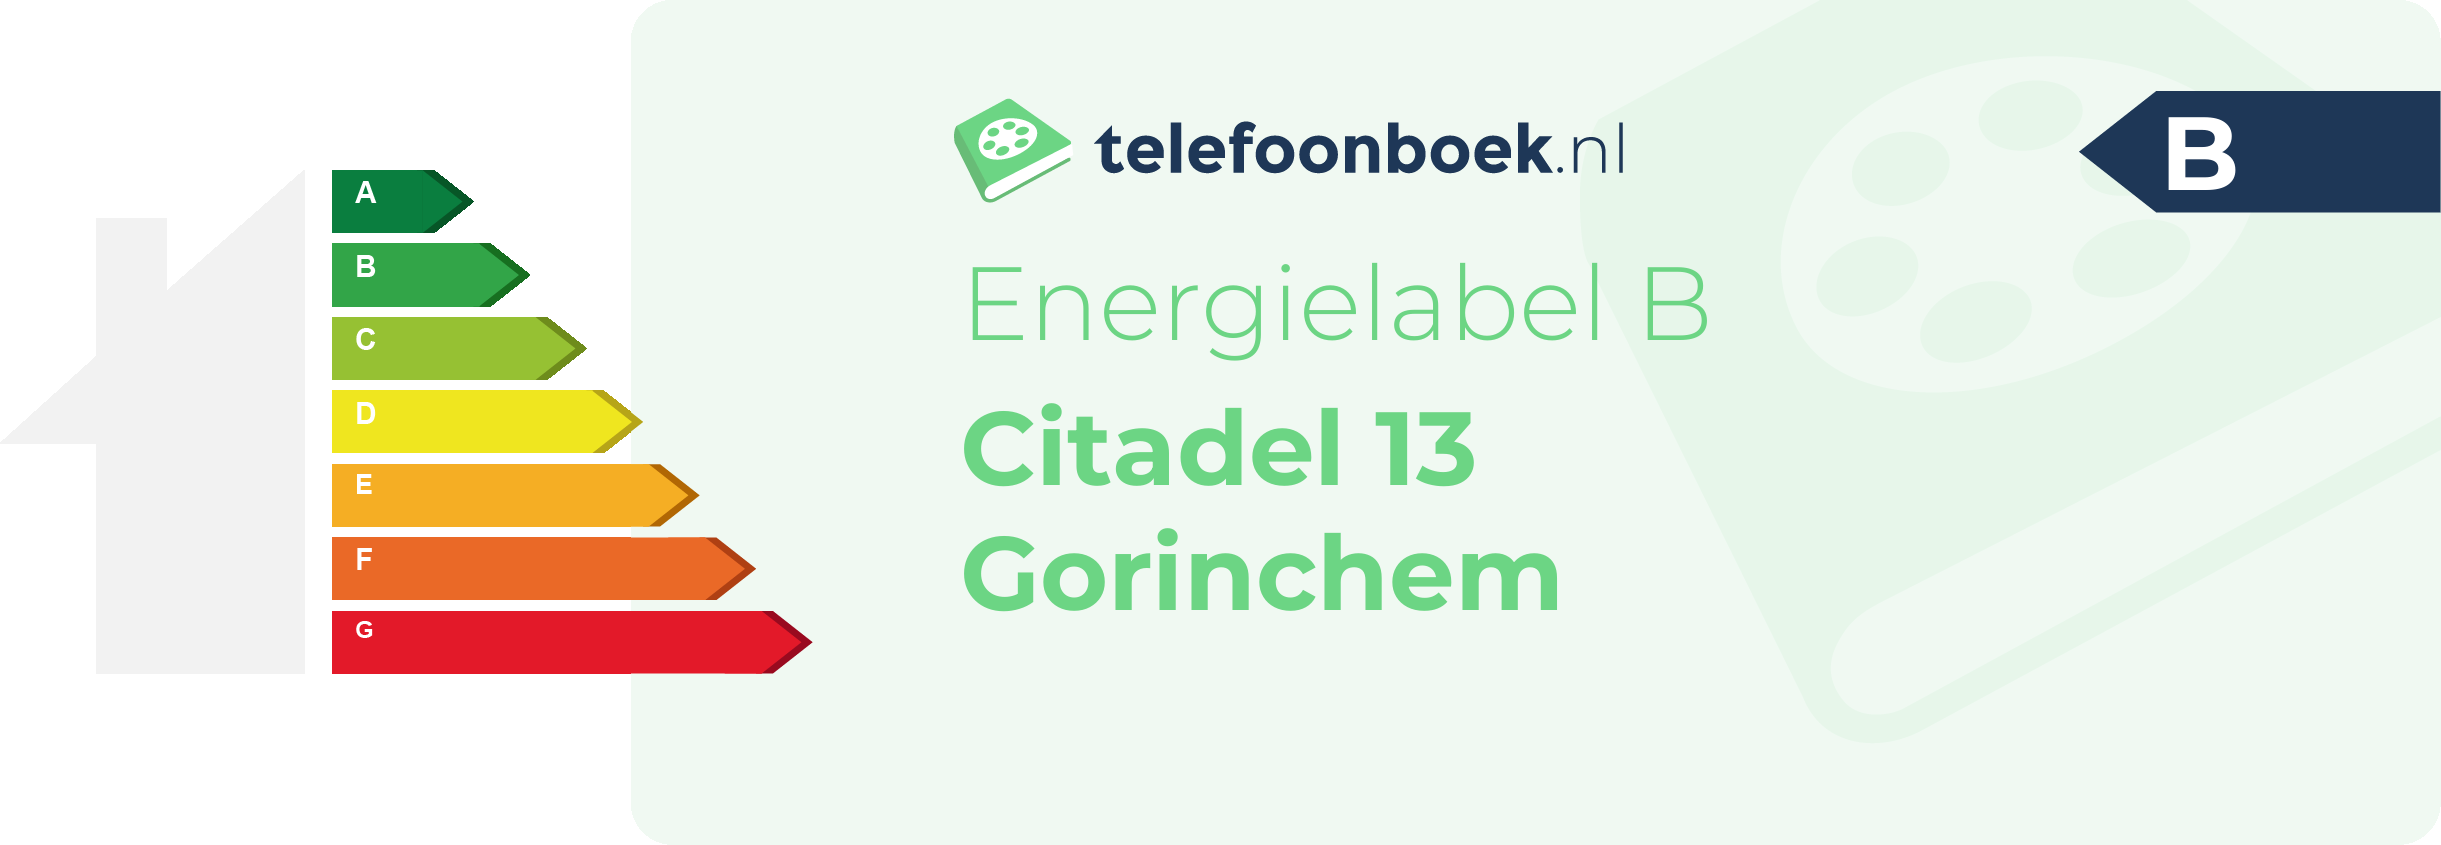 Energielabel Citadel 13 Gorinchem